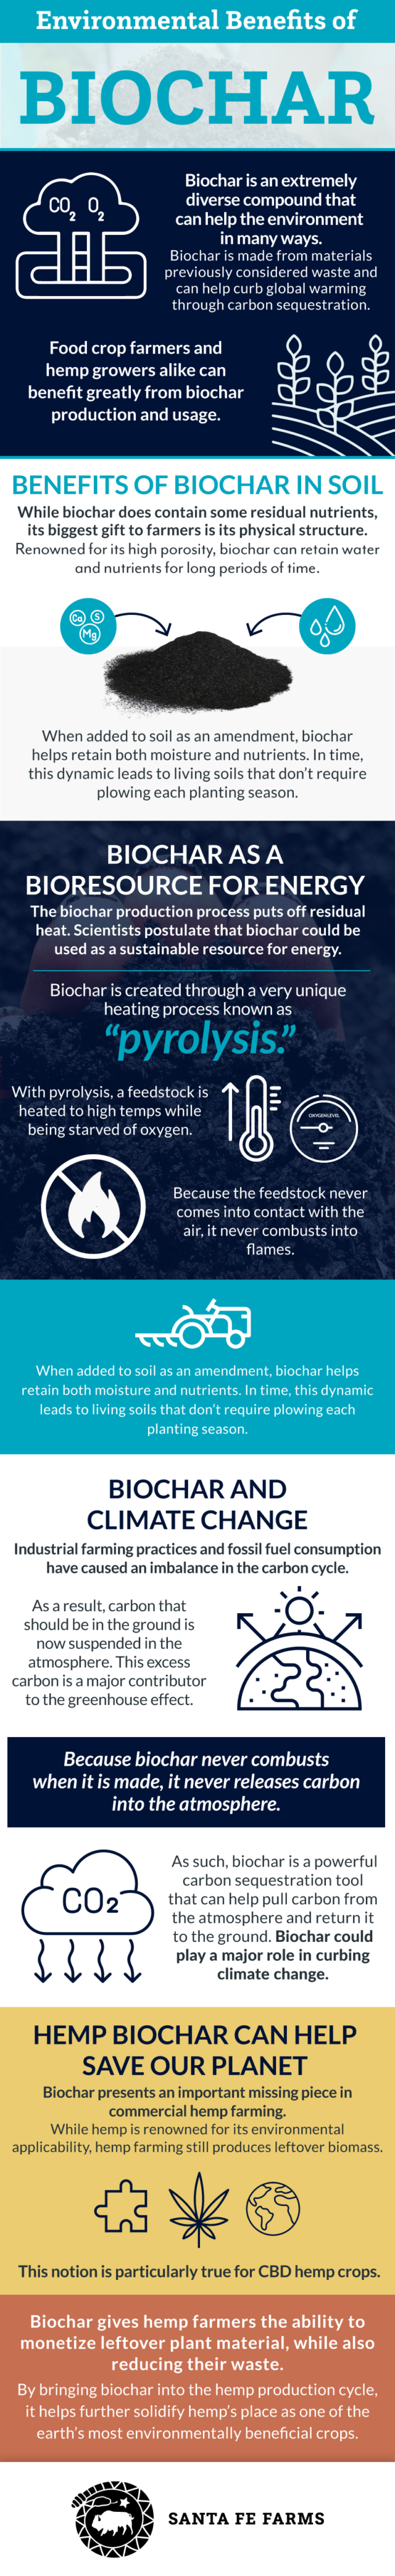 Environmental Benefits of Biochar - Infographic